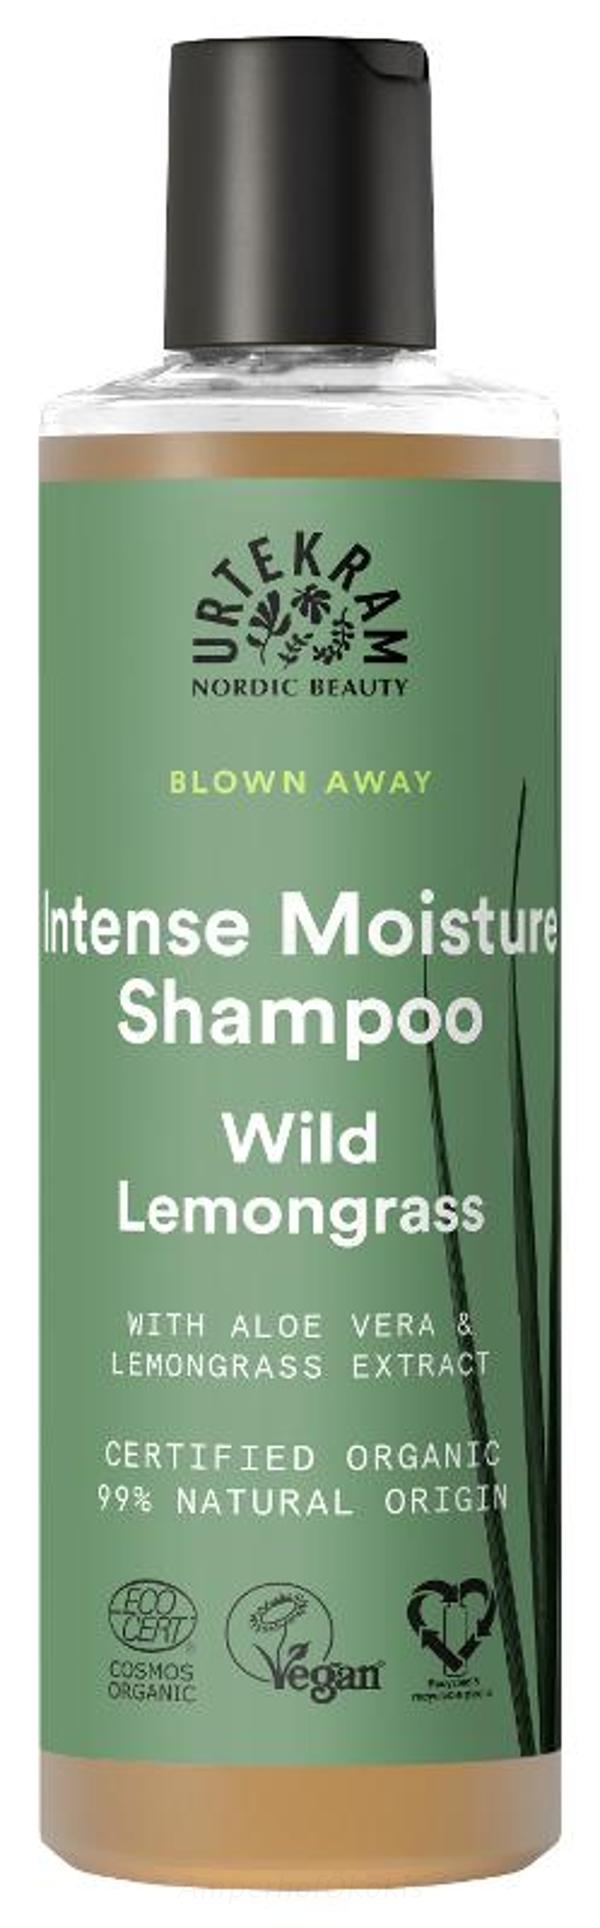 Produktfoto zu Shampoo Wild Lemongrass 250 ml